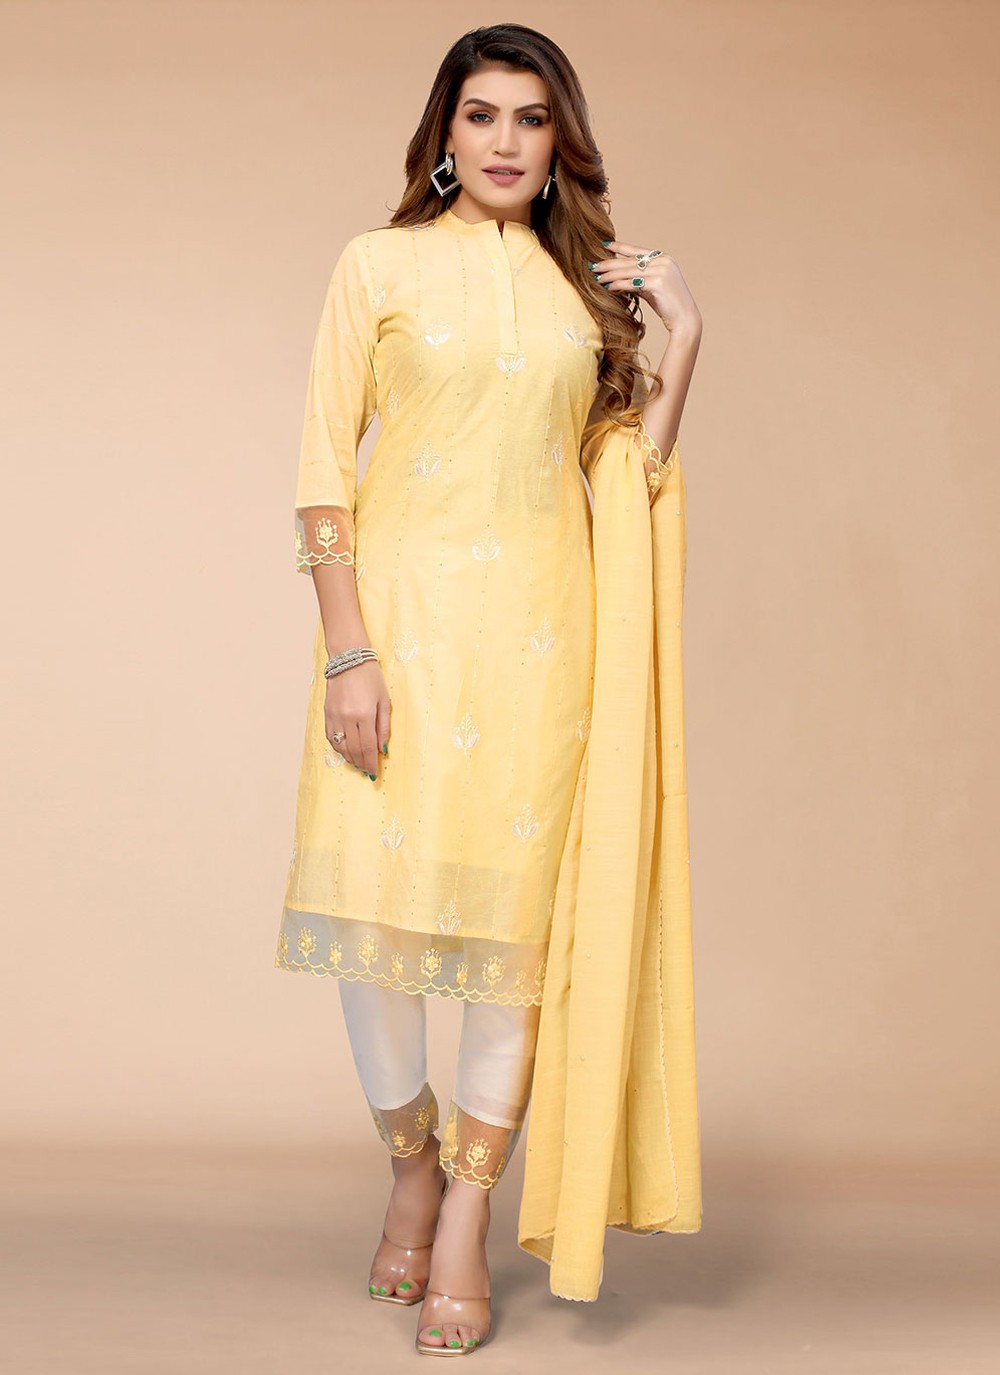 Yellow Color Readymade Salwar Suit